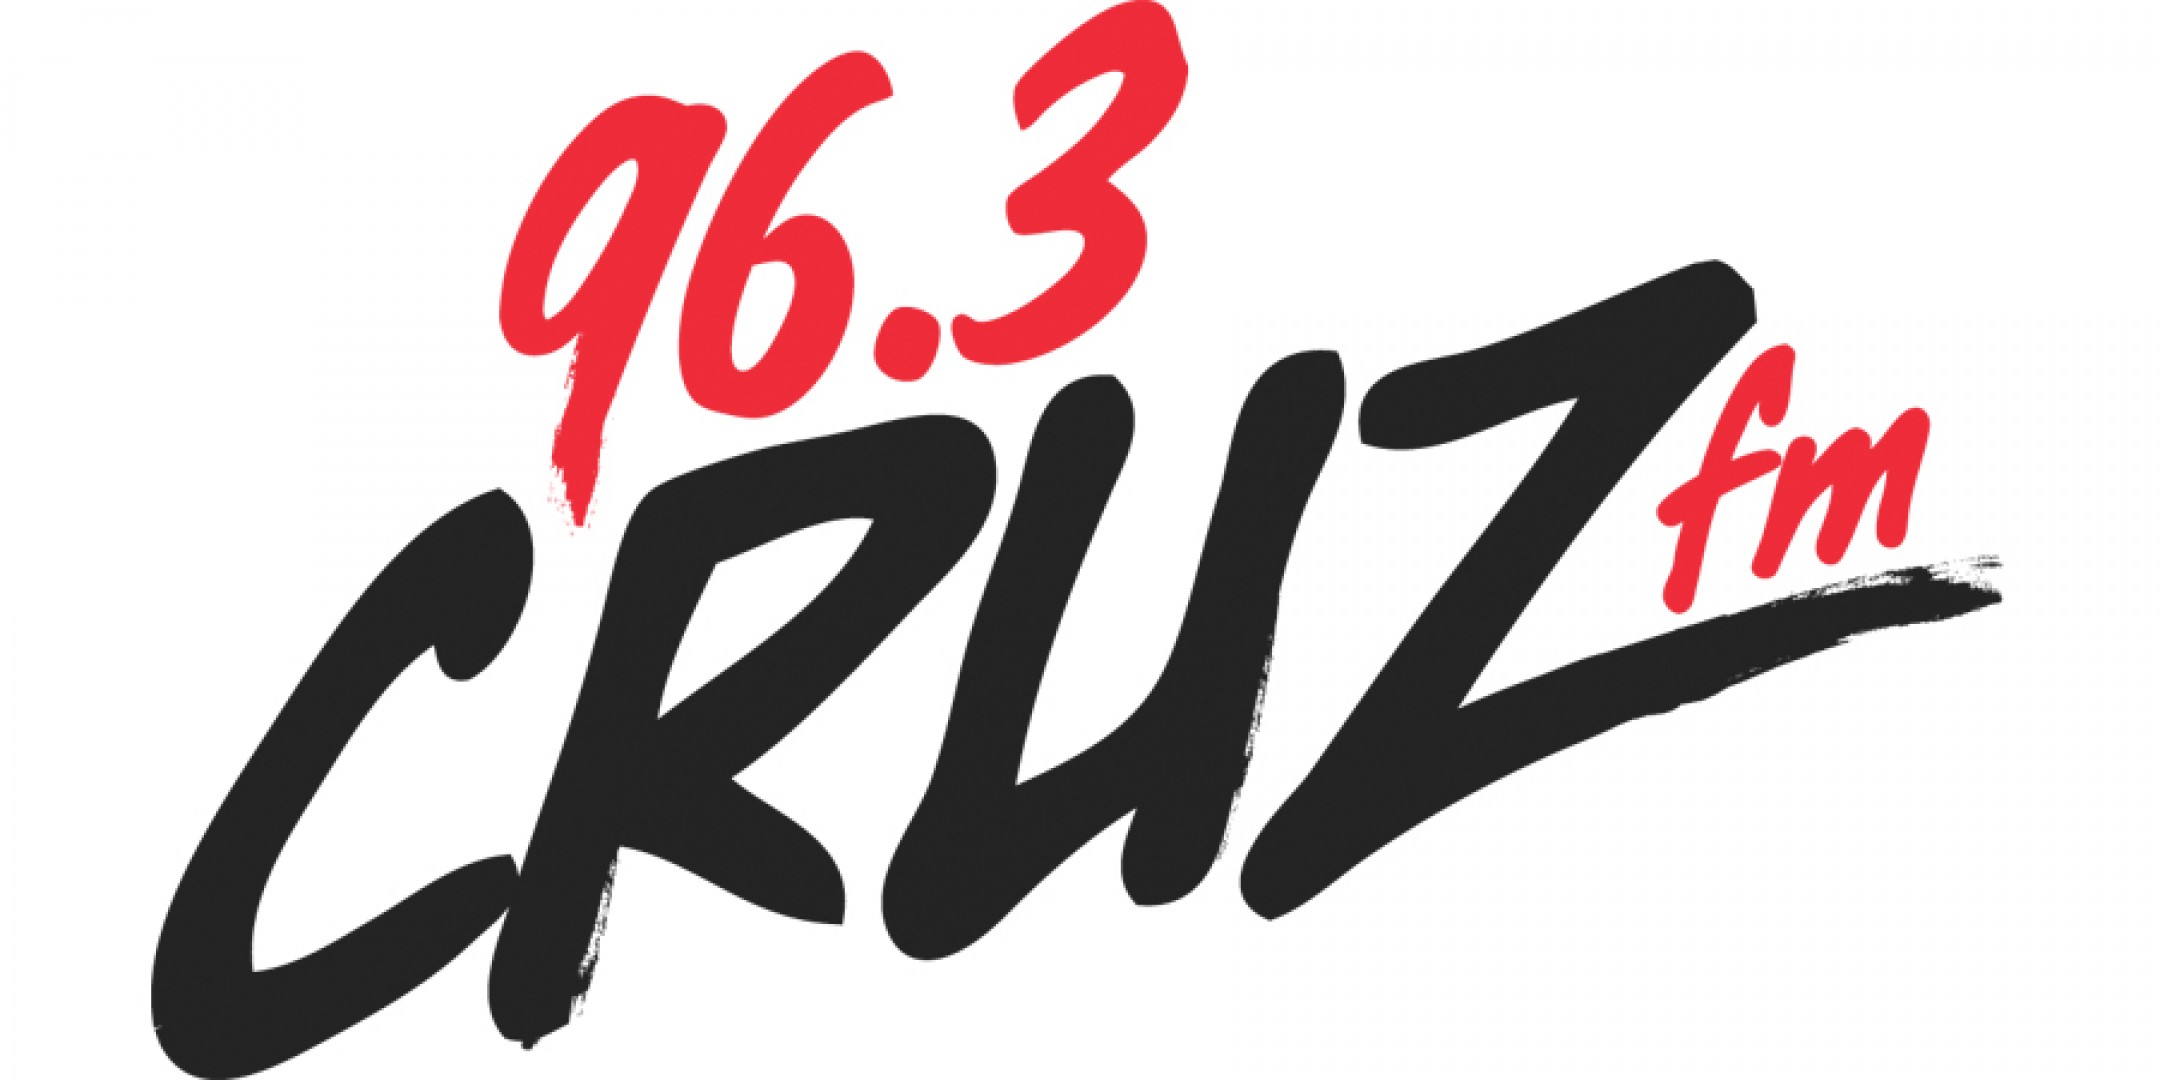 96.3 Cruz FM